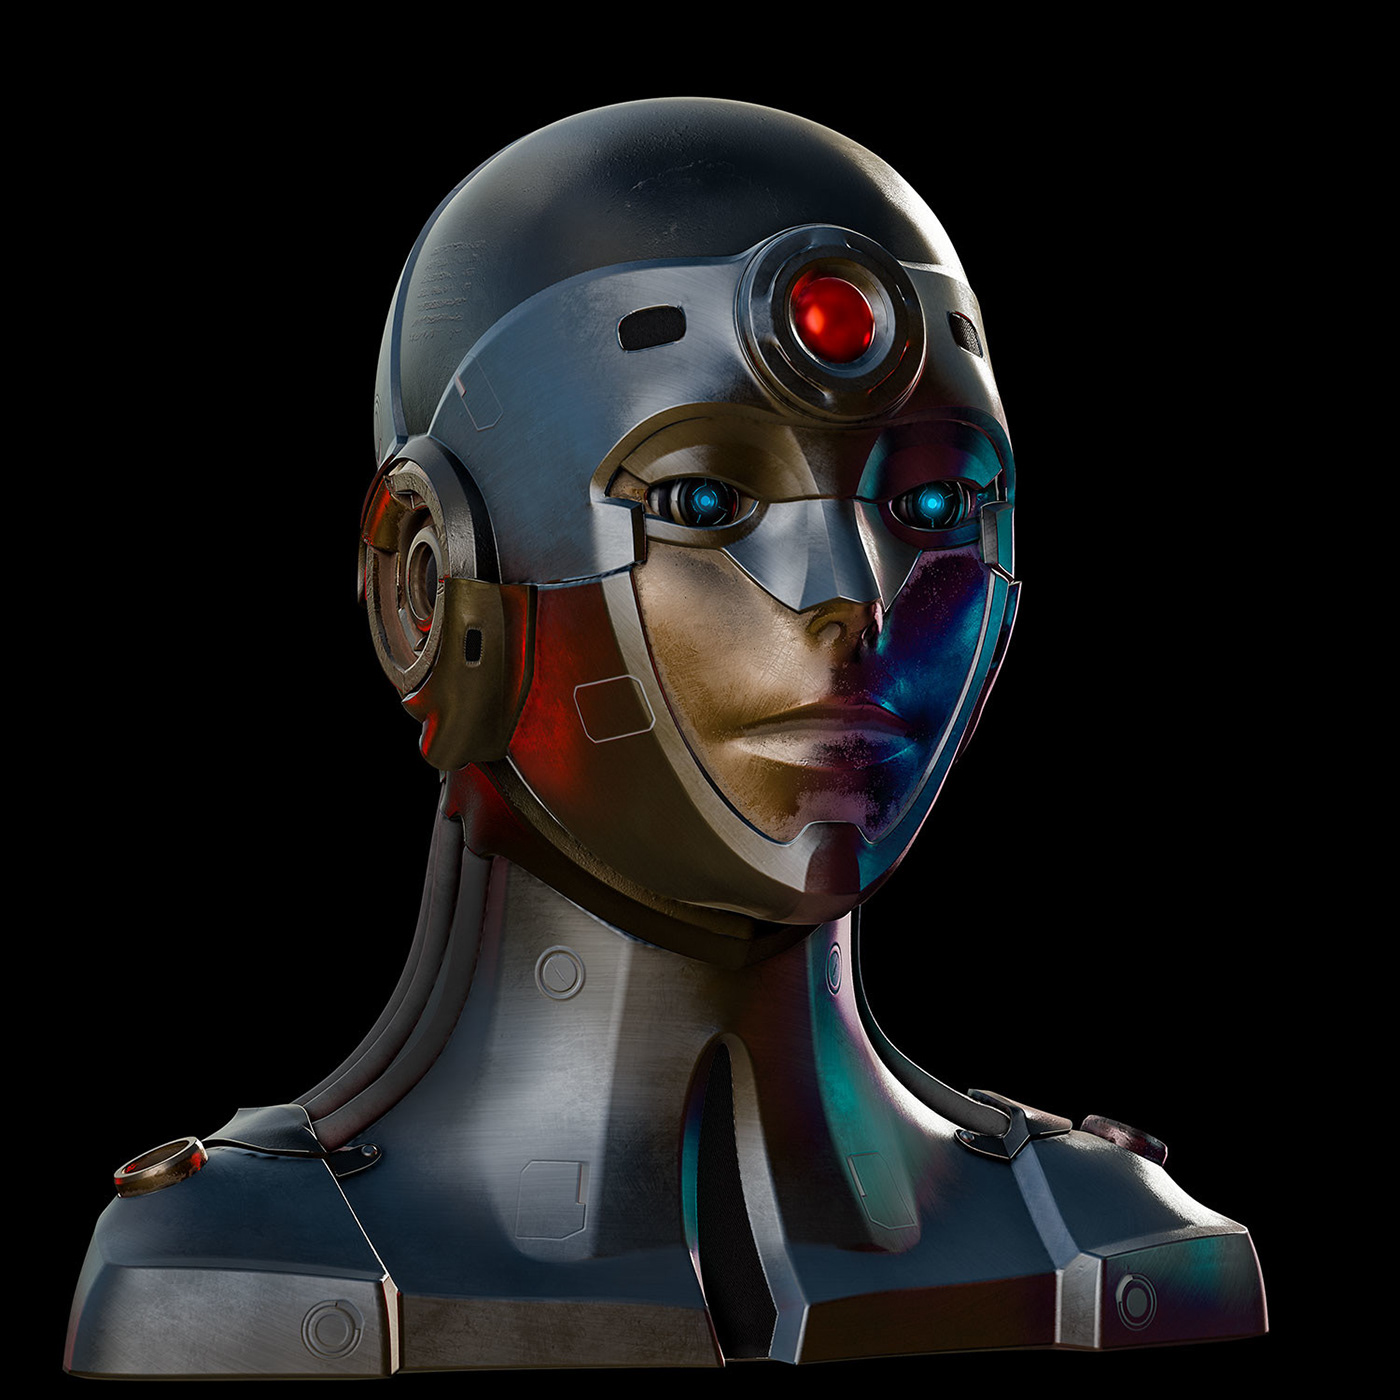 3dmodeling characterdesign gamedesign ILLUSTRATION  robot